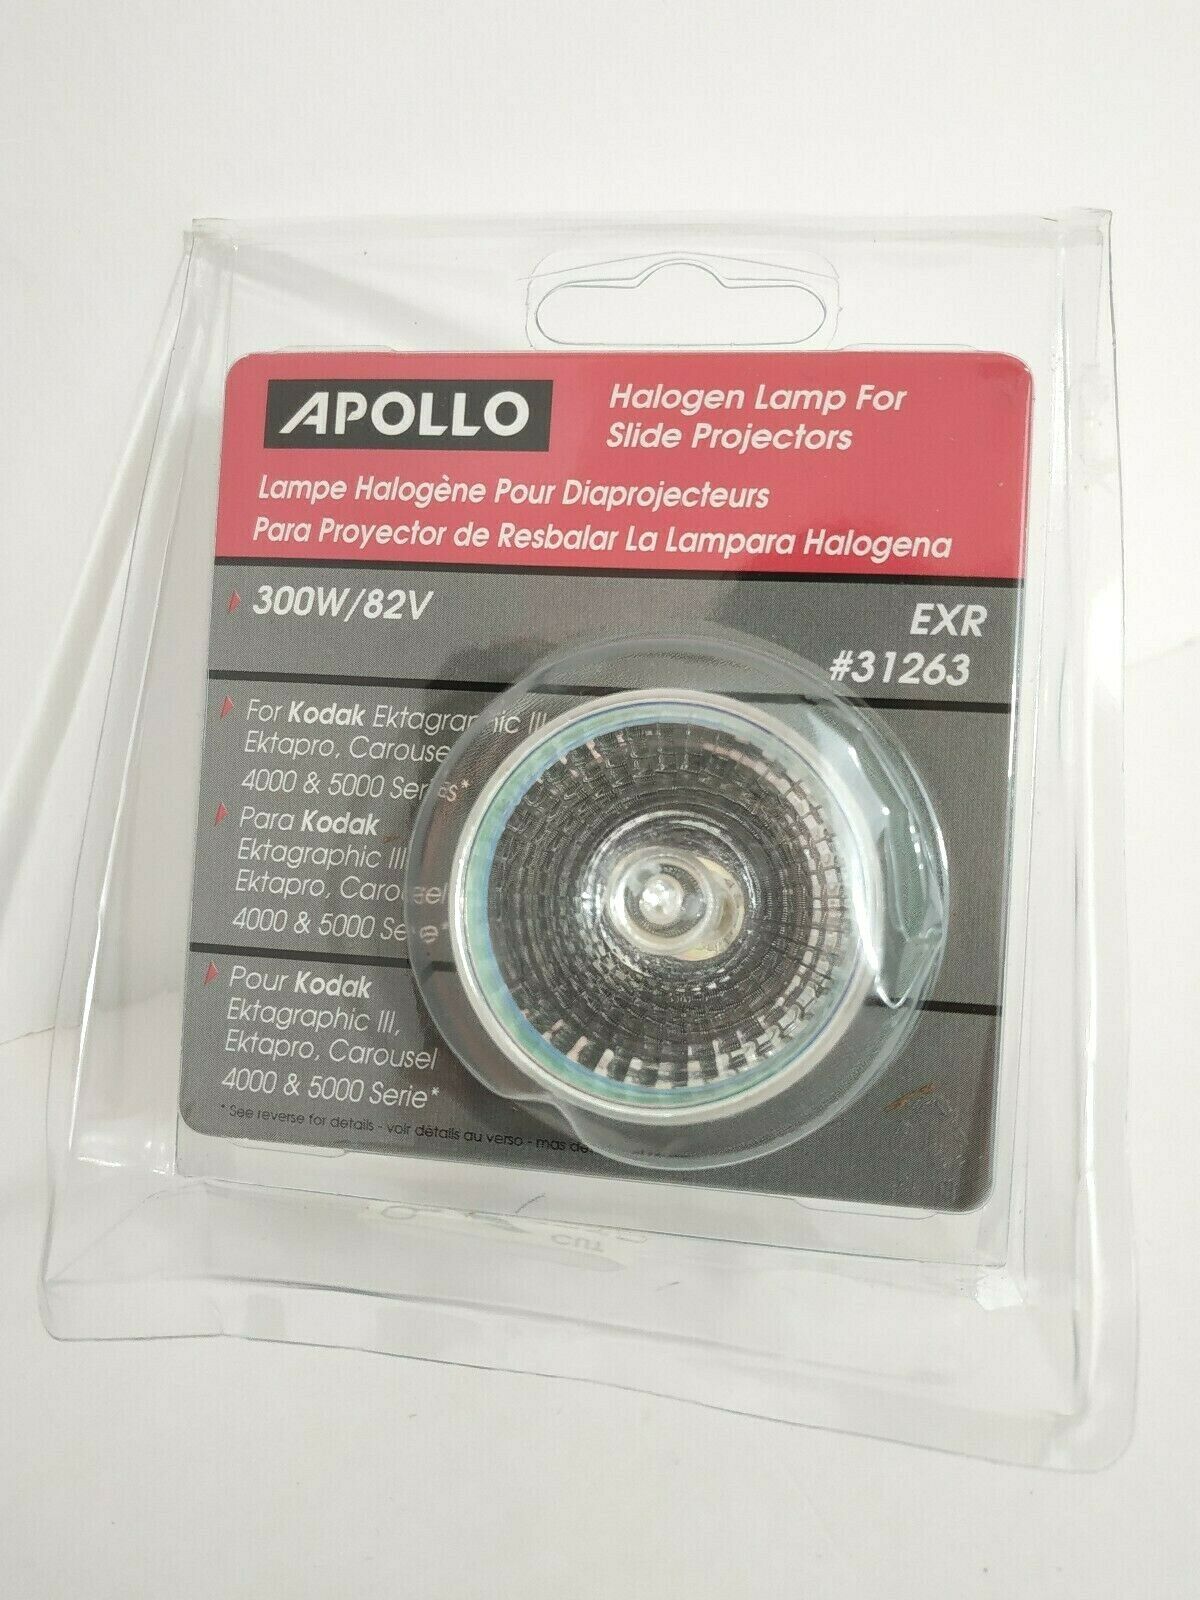 Apollo Exr #31263 300w 82v Halogen Lamp For Kodak Ektagraphic Slide Projectors